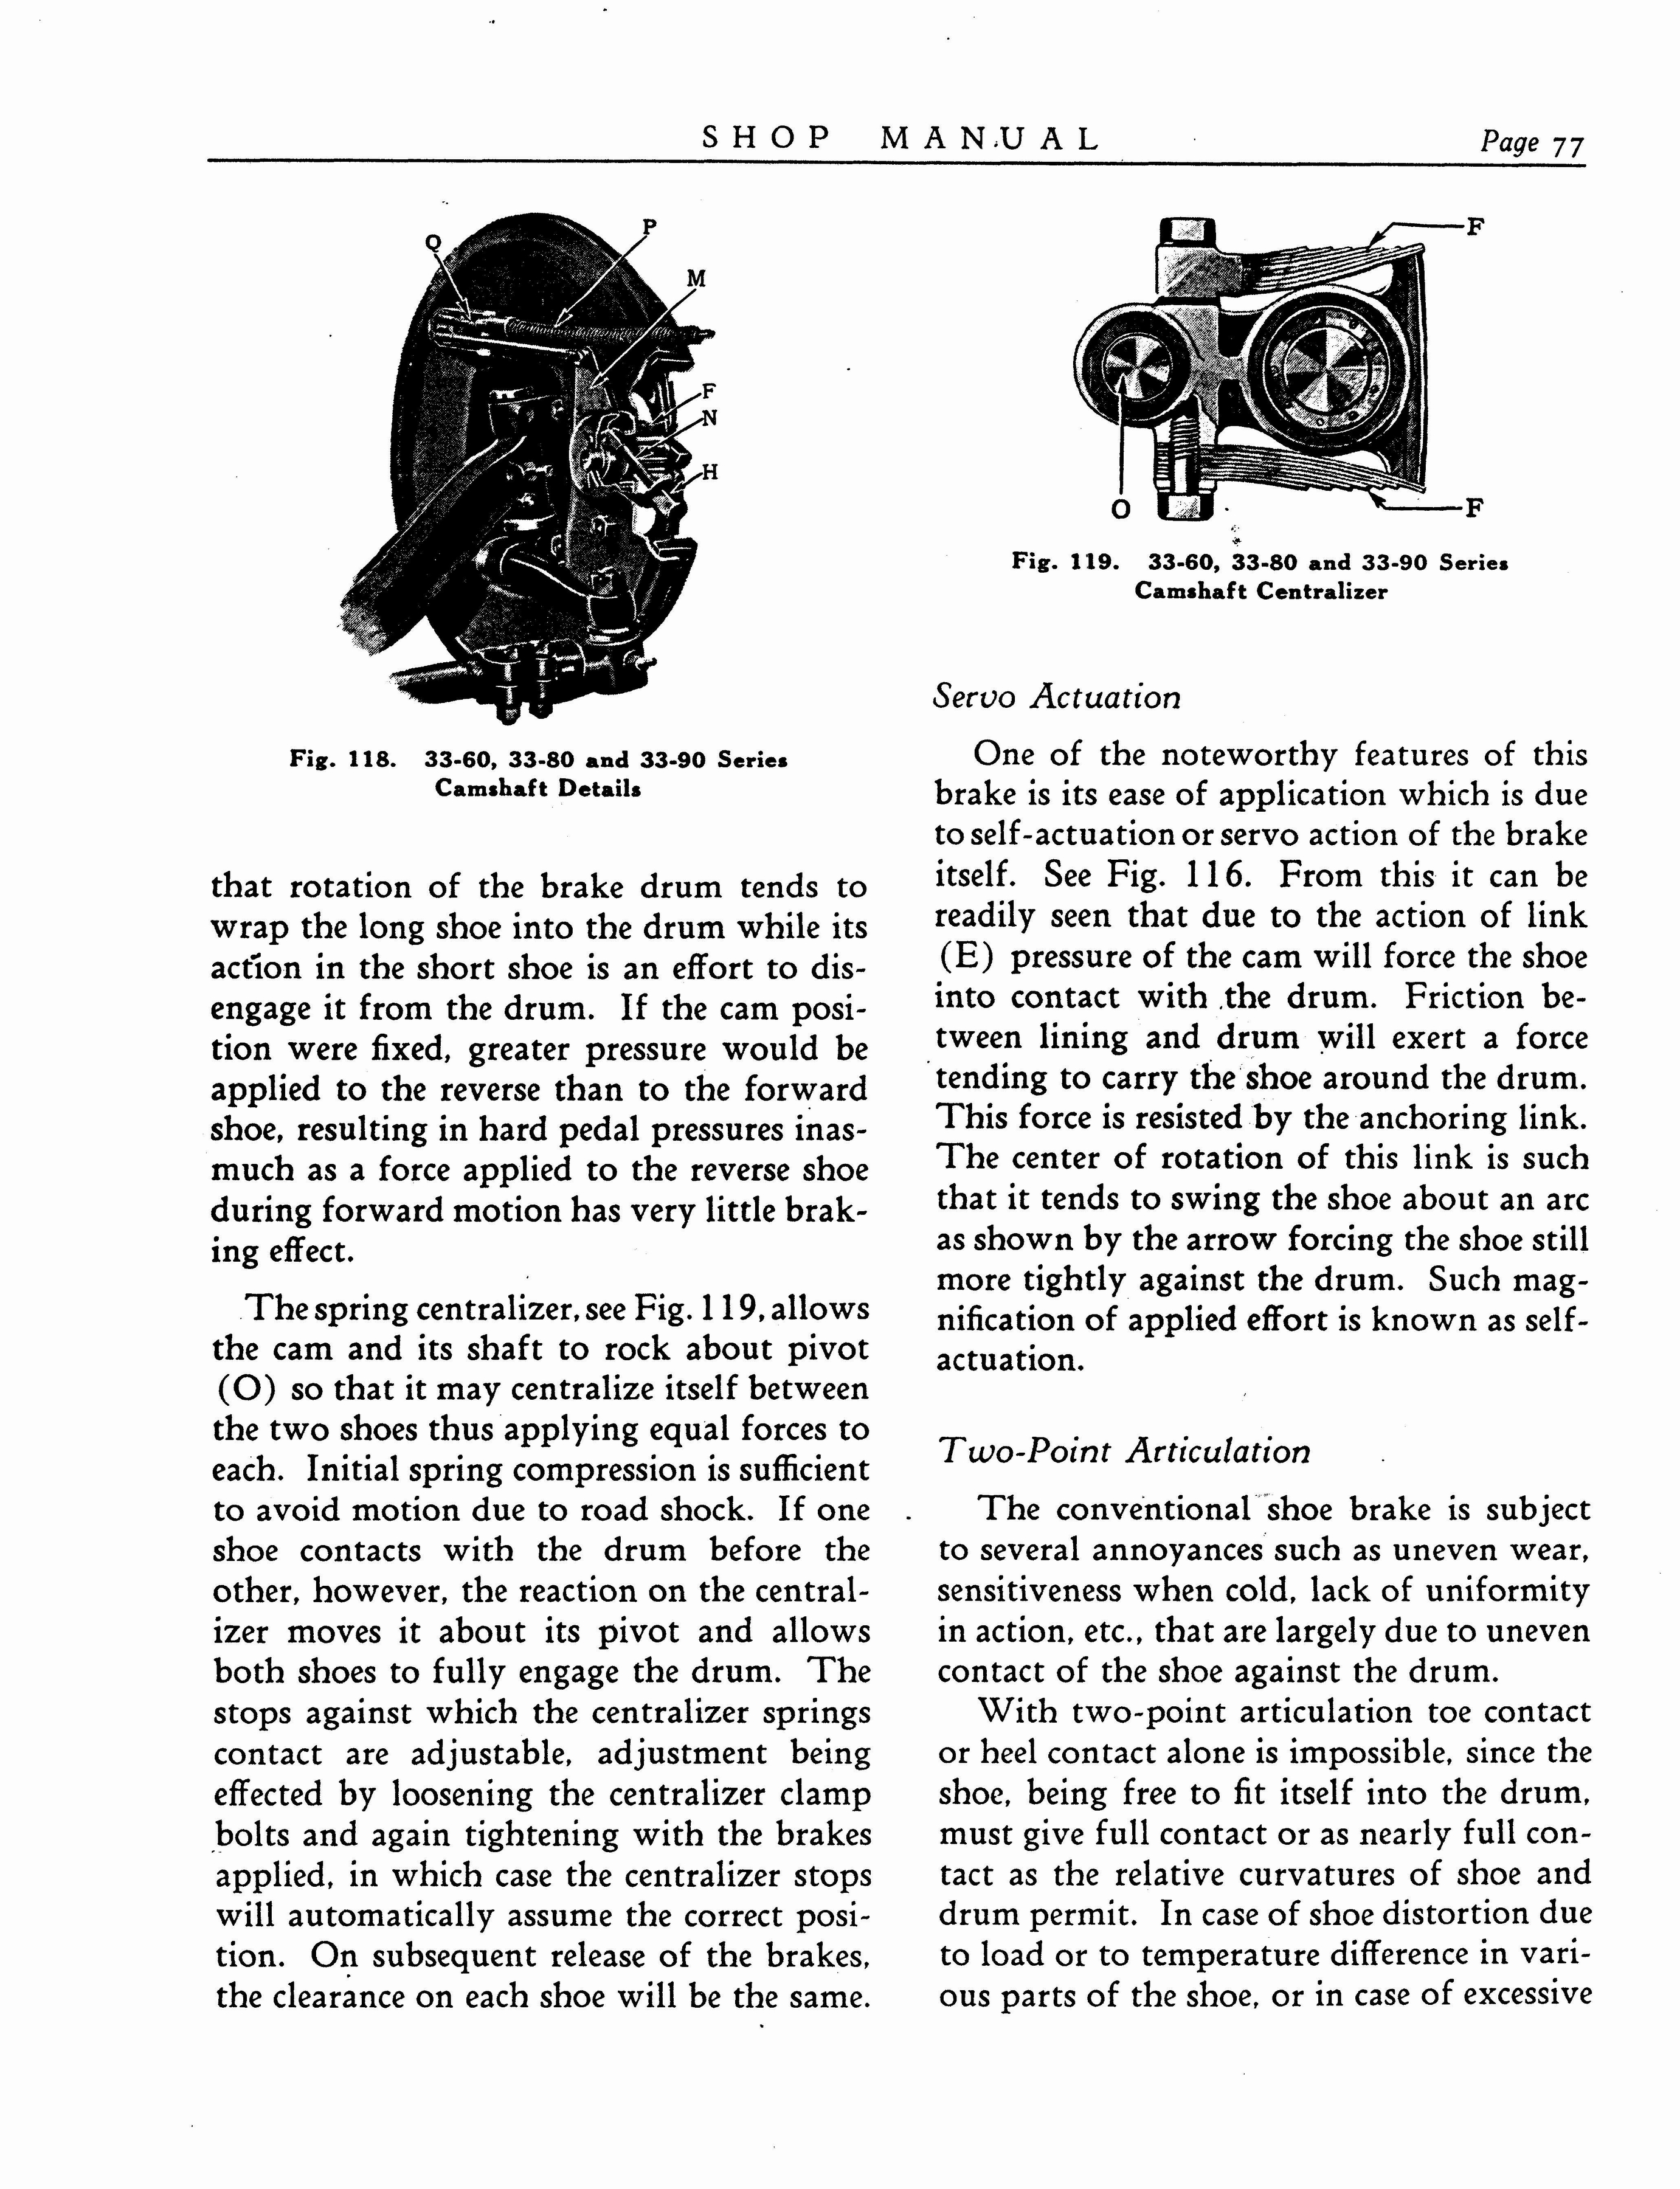 n_1933 Buick Shop Manual_Page_078.jpg